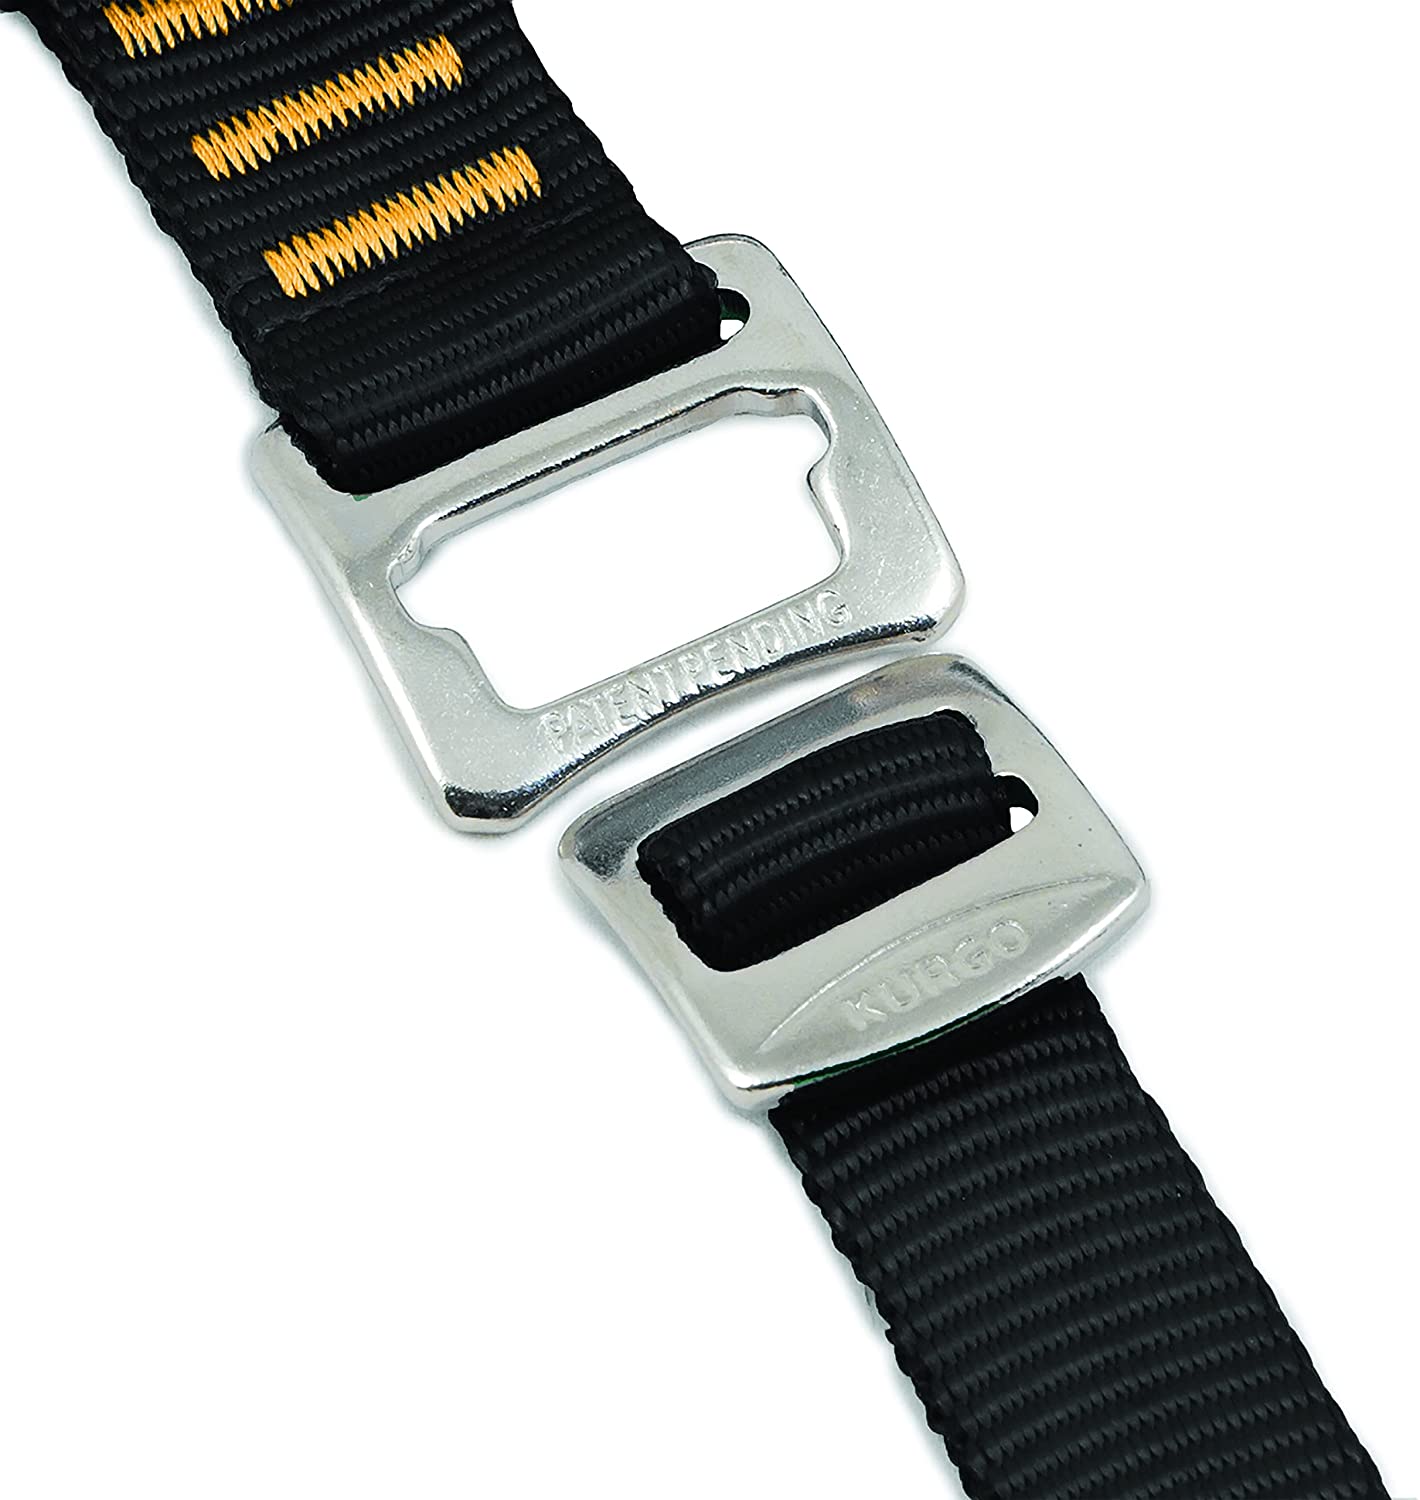 KURGO Enhanced Strength Tru-Fit Smart Harness w/seatbelt tether -Black 25-50 lbs - M